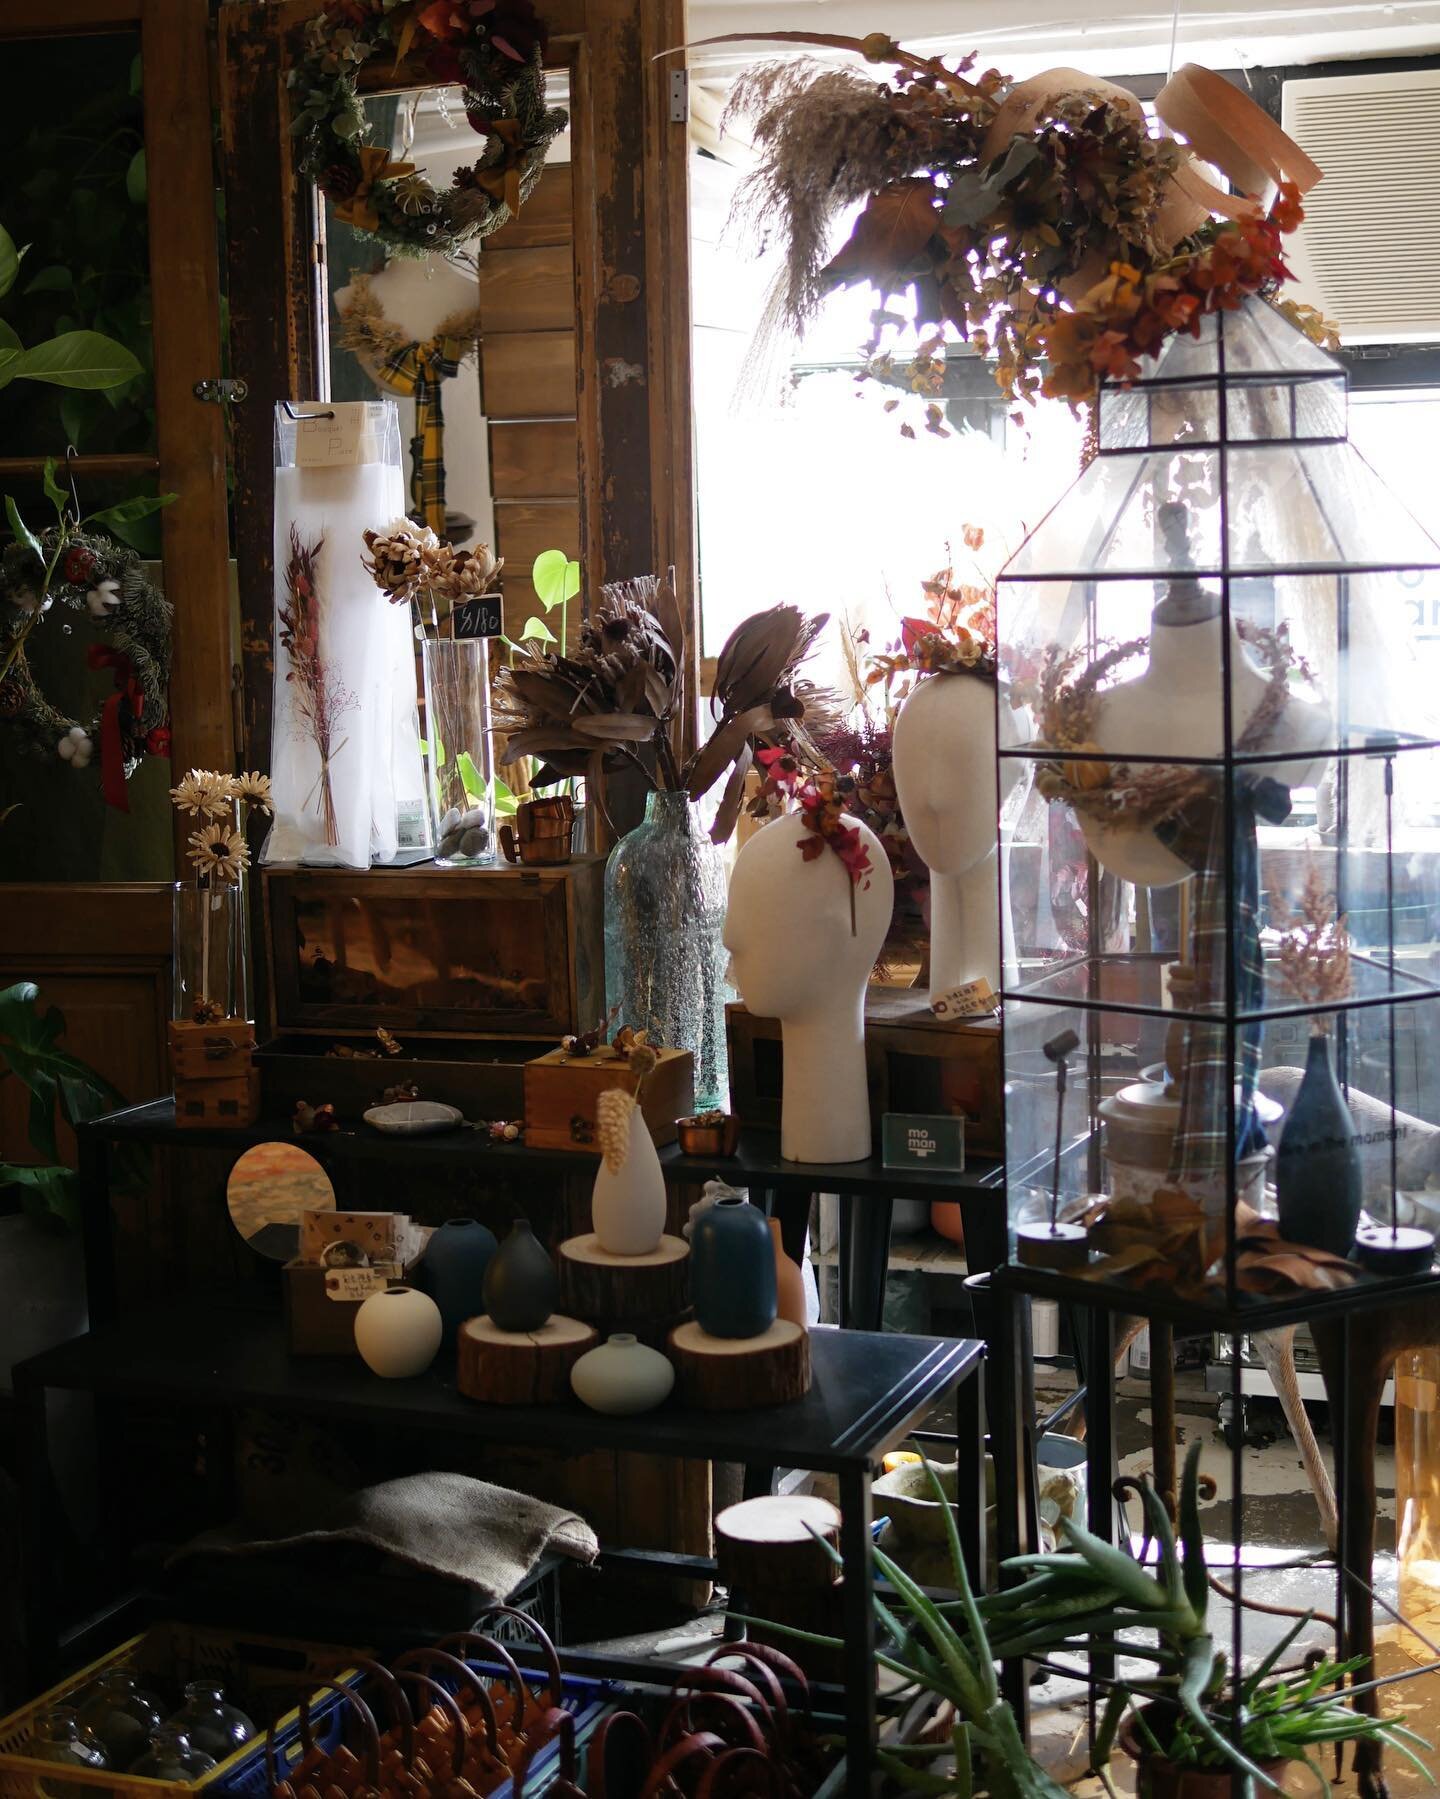 Floral Shop in shop @momant_studio
&middot;
窗邊的美麗花店由 @momant_studio 主理，訂乾鮮花束/ Floral installation 可以跟我們聯絡。
．

由於疫情關係，Parc古道具公園 本館將不定時開放( 或by appointment) ，以網路形式進行販售。見諒身體健康！
⋯⋯⋯
[ Brand Story ]
𝚸𝚨𝐑𝐂 古道具公園．
&lsquo;-𝐟𝐫𝐞𝐧𝐜𝐡 𝐚𝐧𝐭𝐢𝐪𝐮𝐞 &amp;